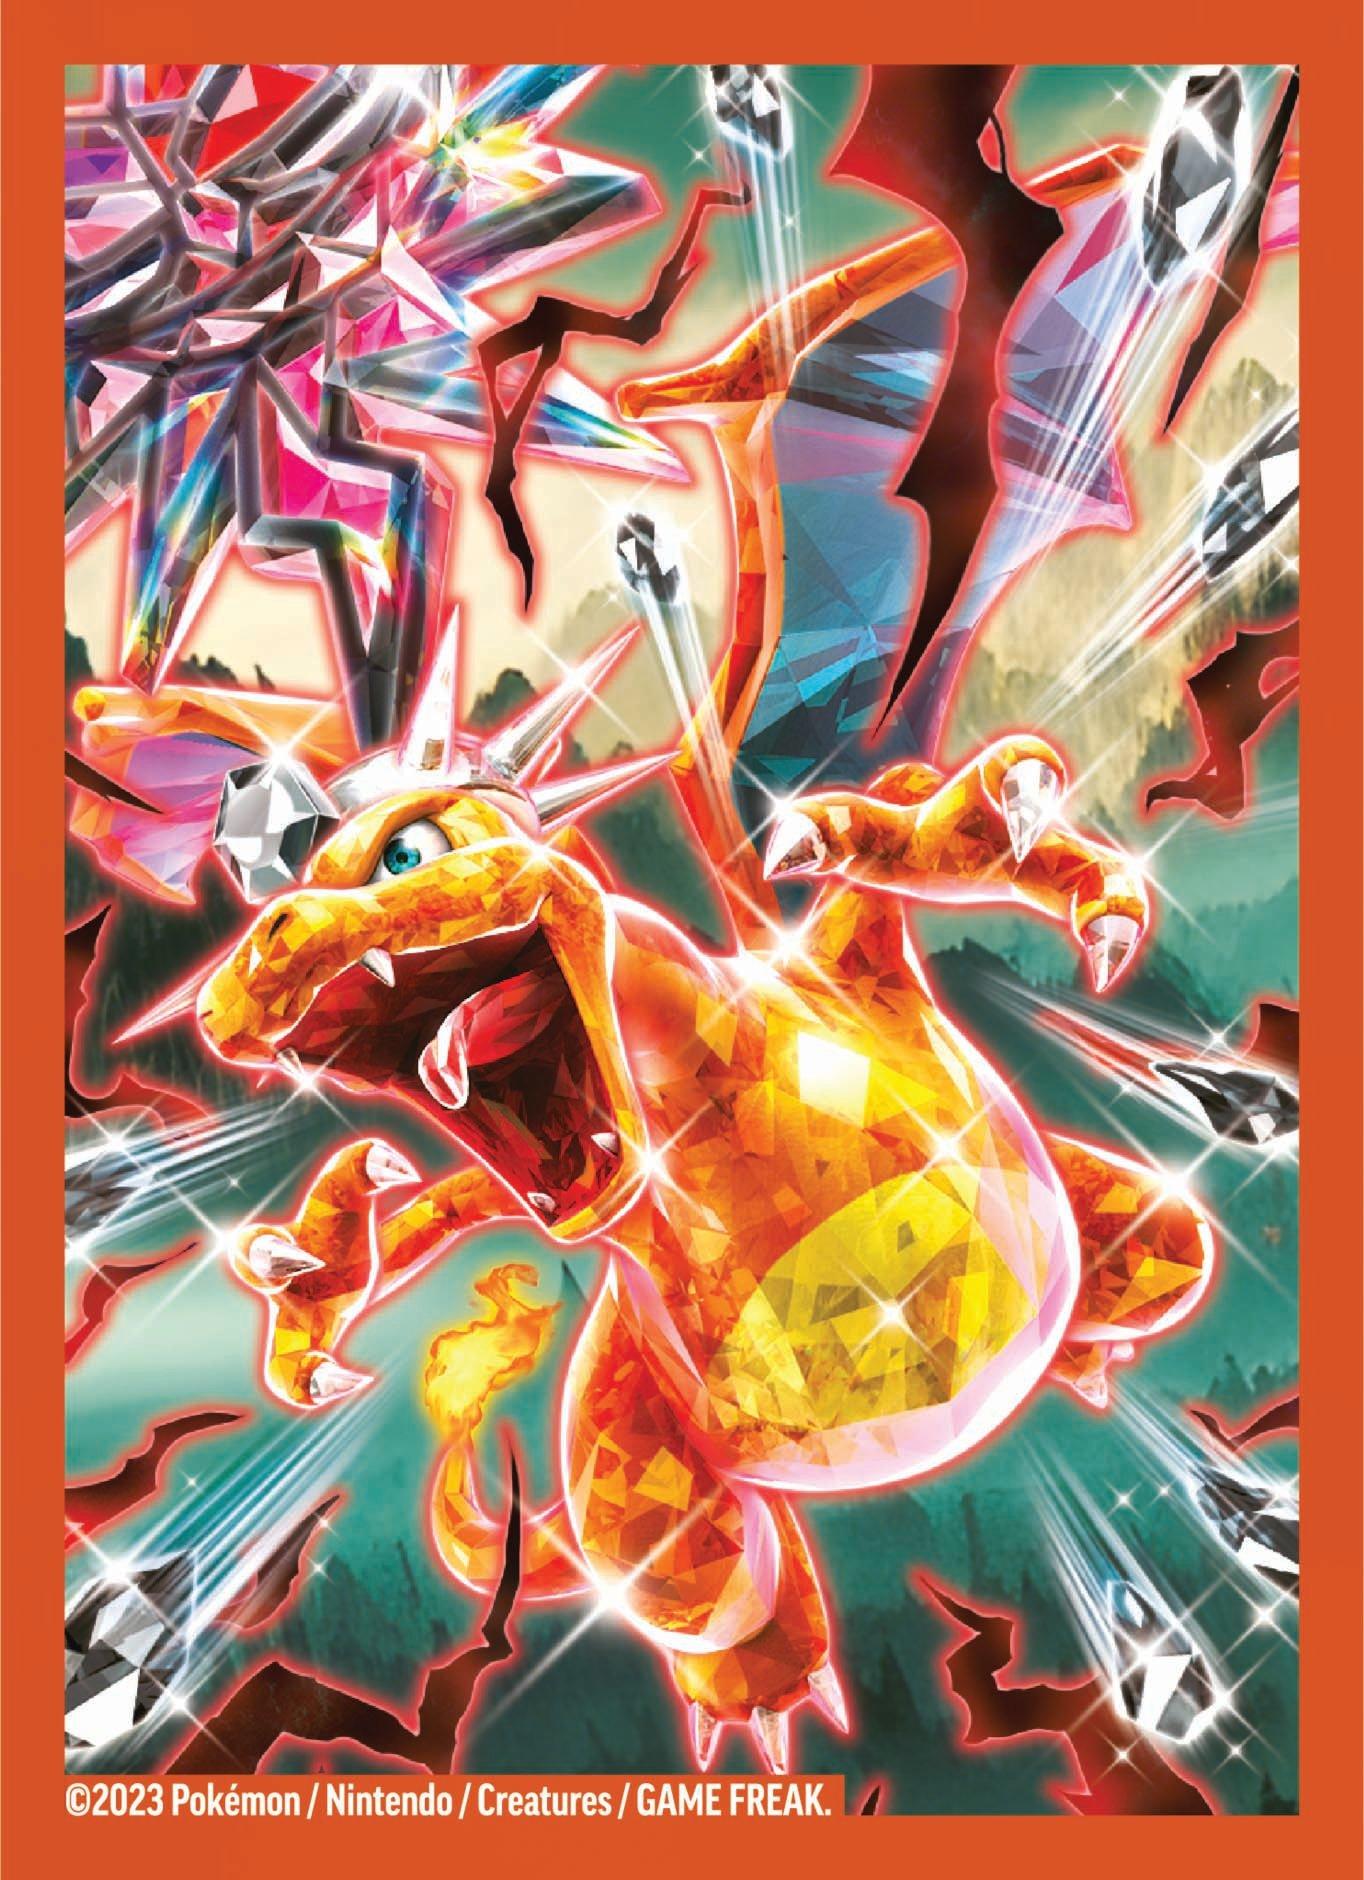 Pokémon Trading Card Game: Charizard Ex Premium Collection : Target